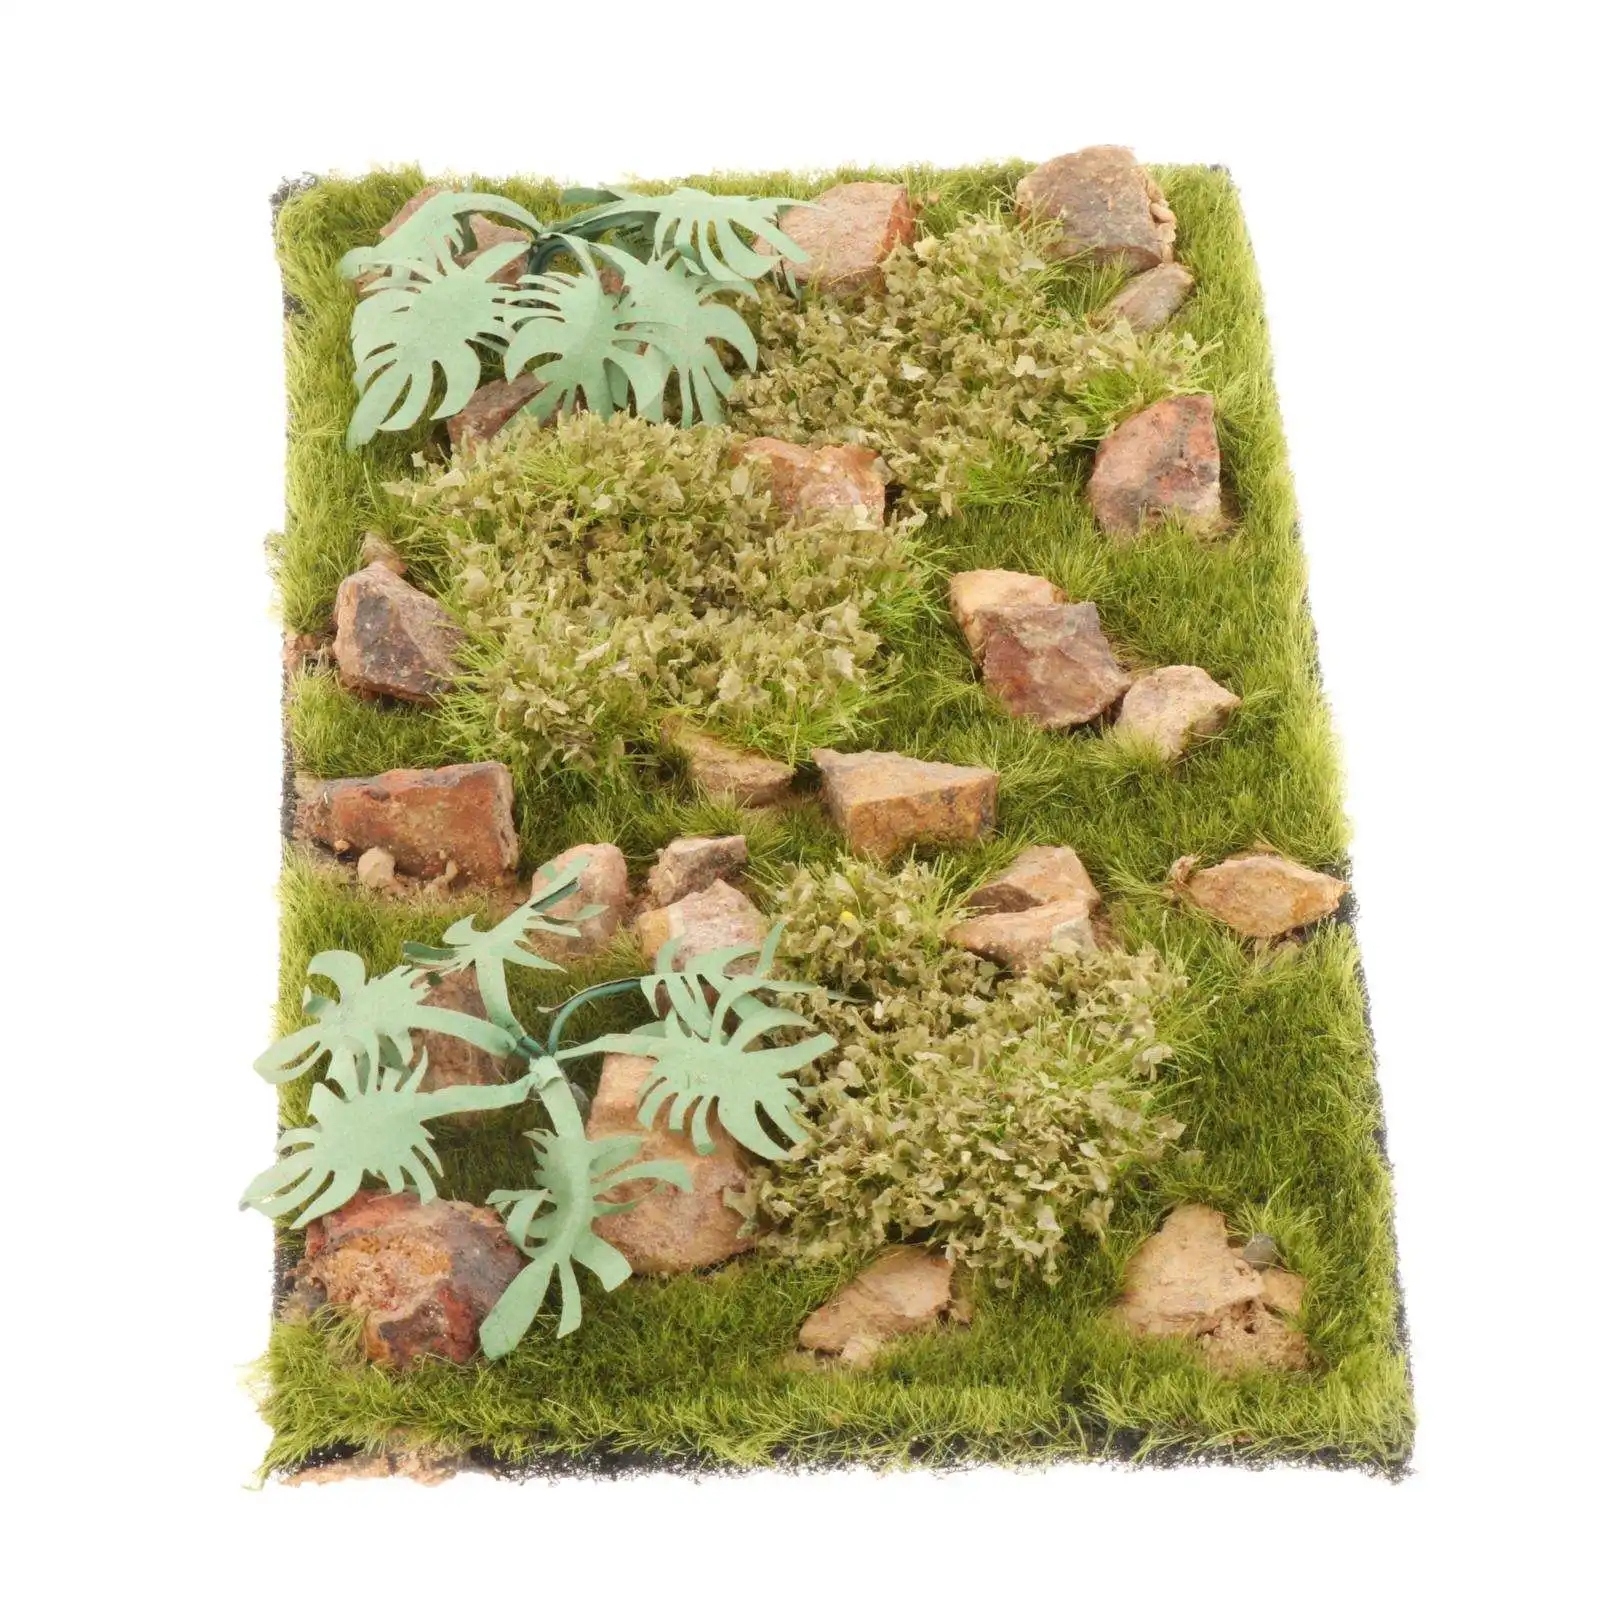 Resin Rock Cluster Grass Scenery Dioramas,Sand Table Train Layout,Wargame Model Scene Terrain